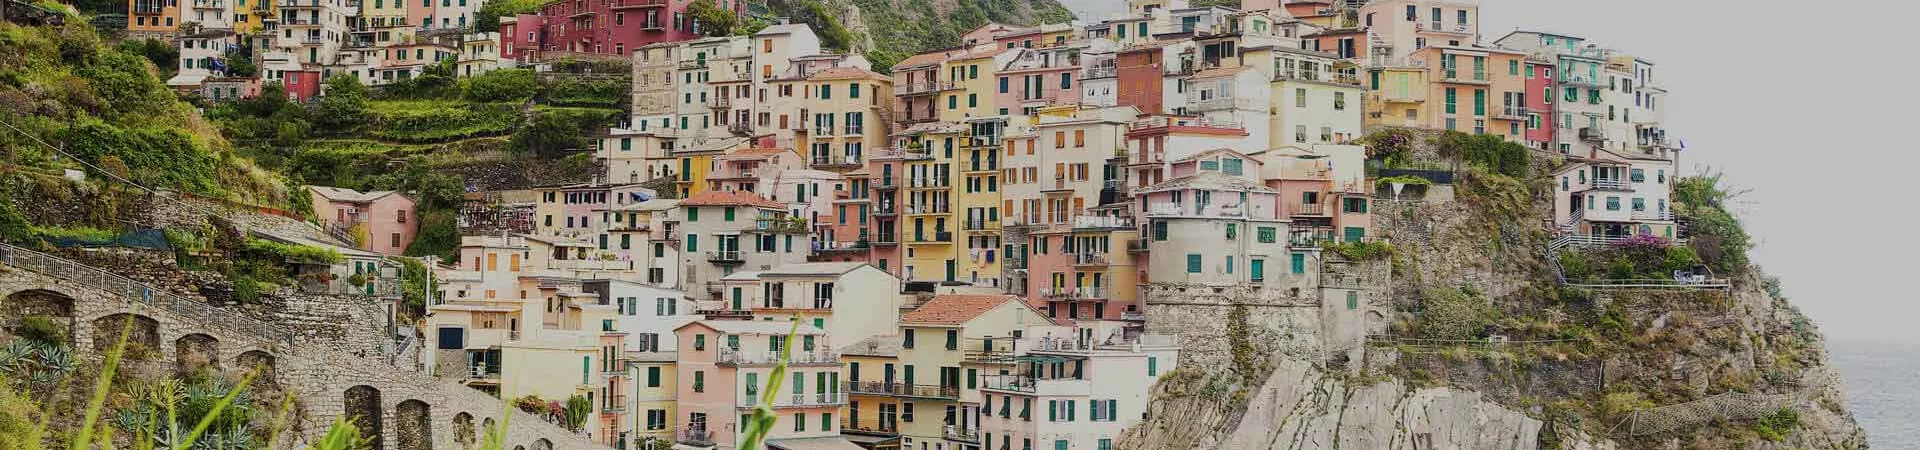 Amalfi Coast Trips and Travel Guide